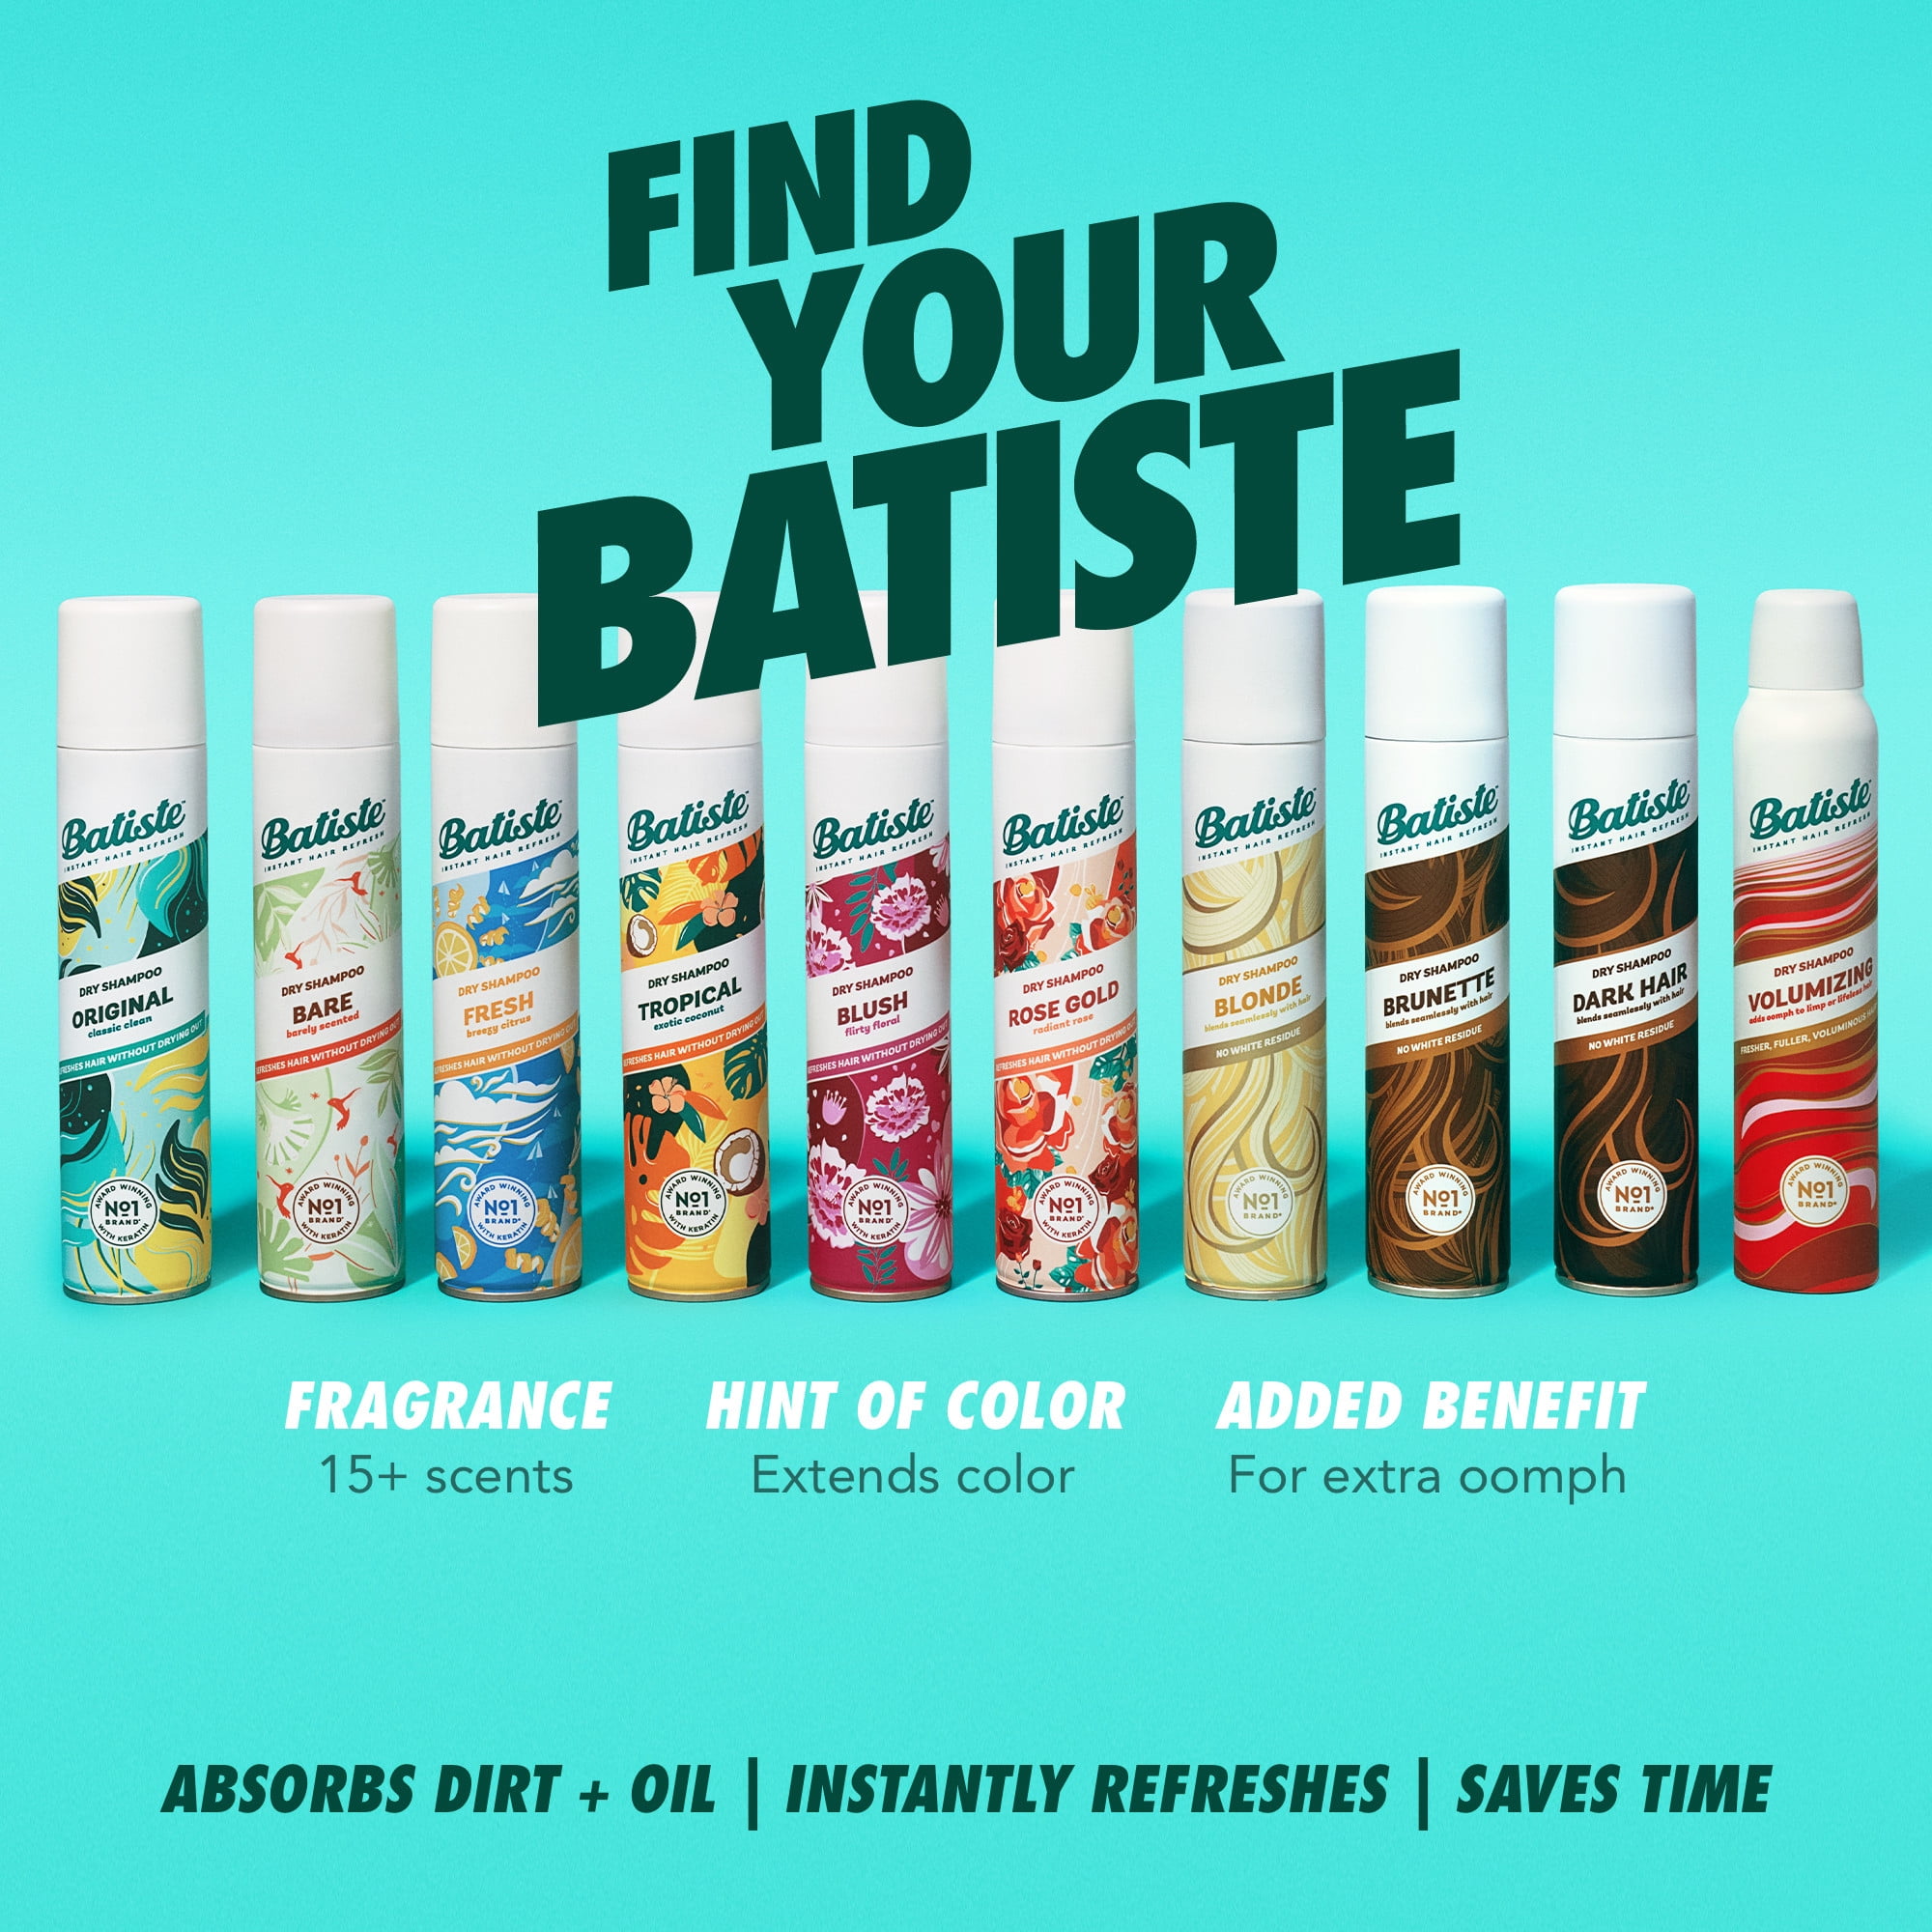 Batiste Dry Shampoo, Original Fragrance, Refresh Hair and Absorb Between Washes, Waterless Shampoo for Hair Body, 6.35 oz Dry Shampoo Bottle - Walmart.com